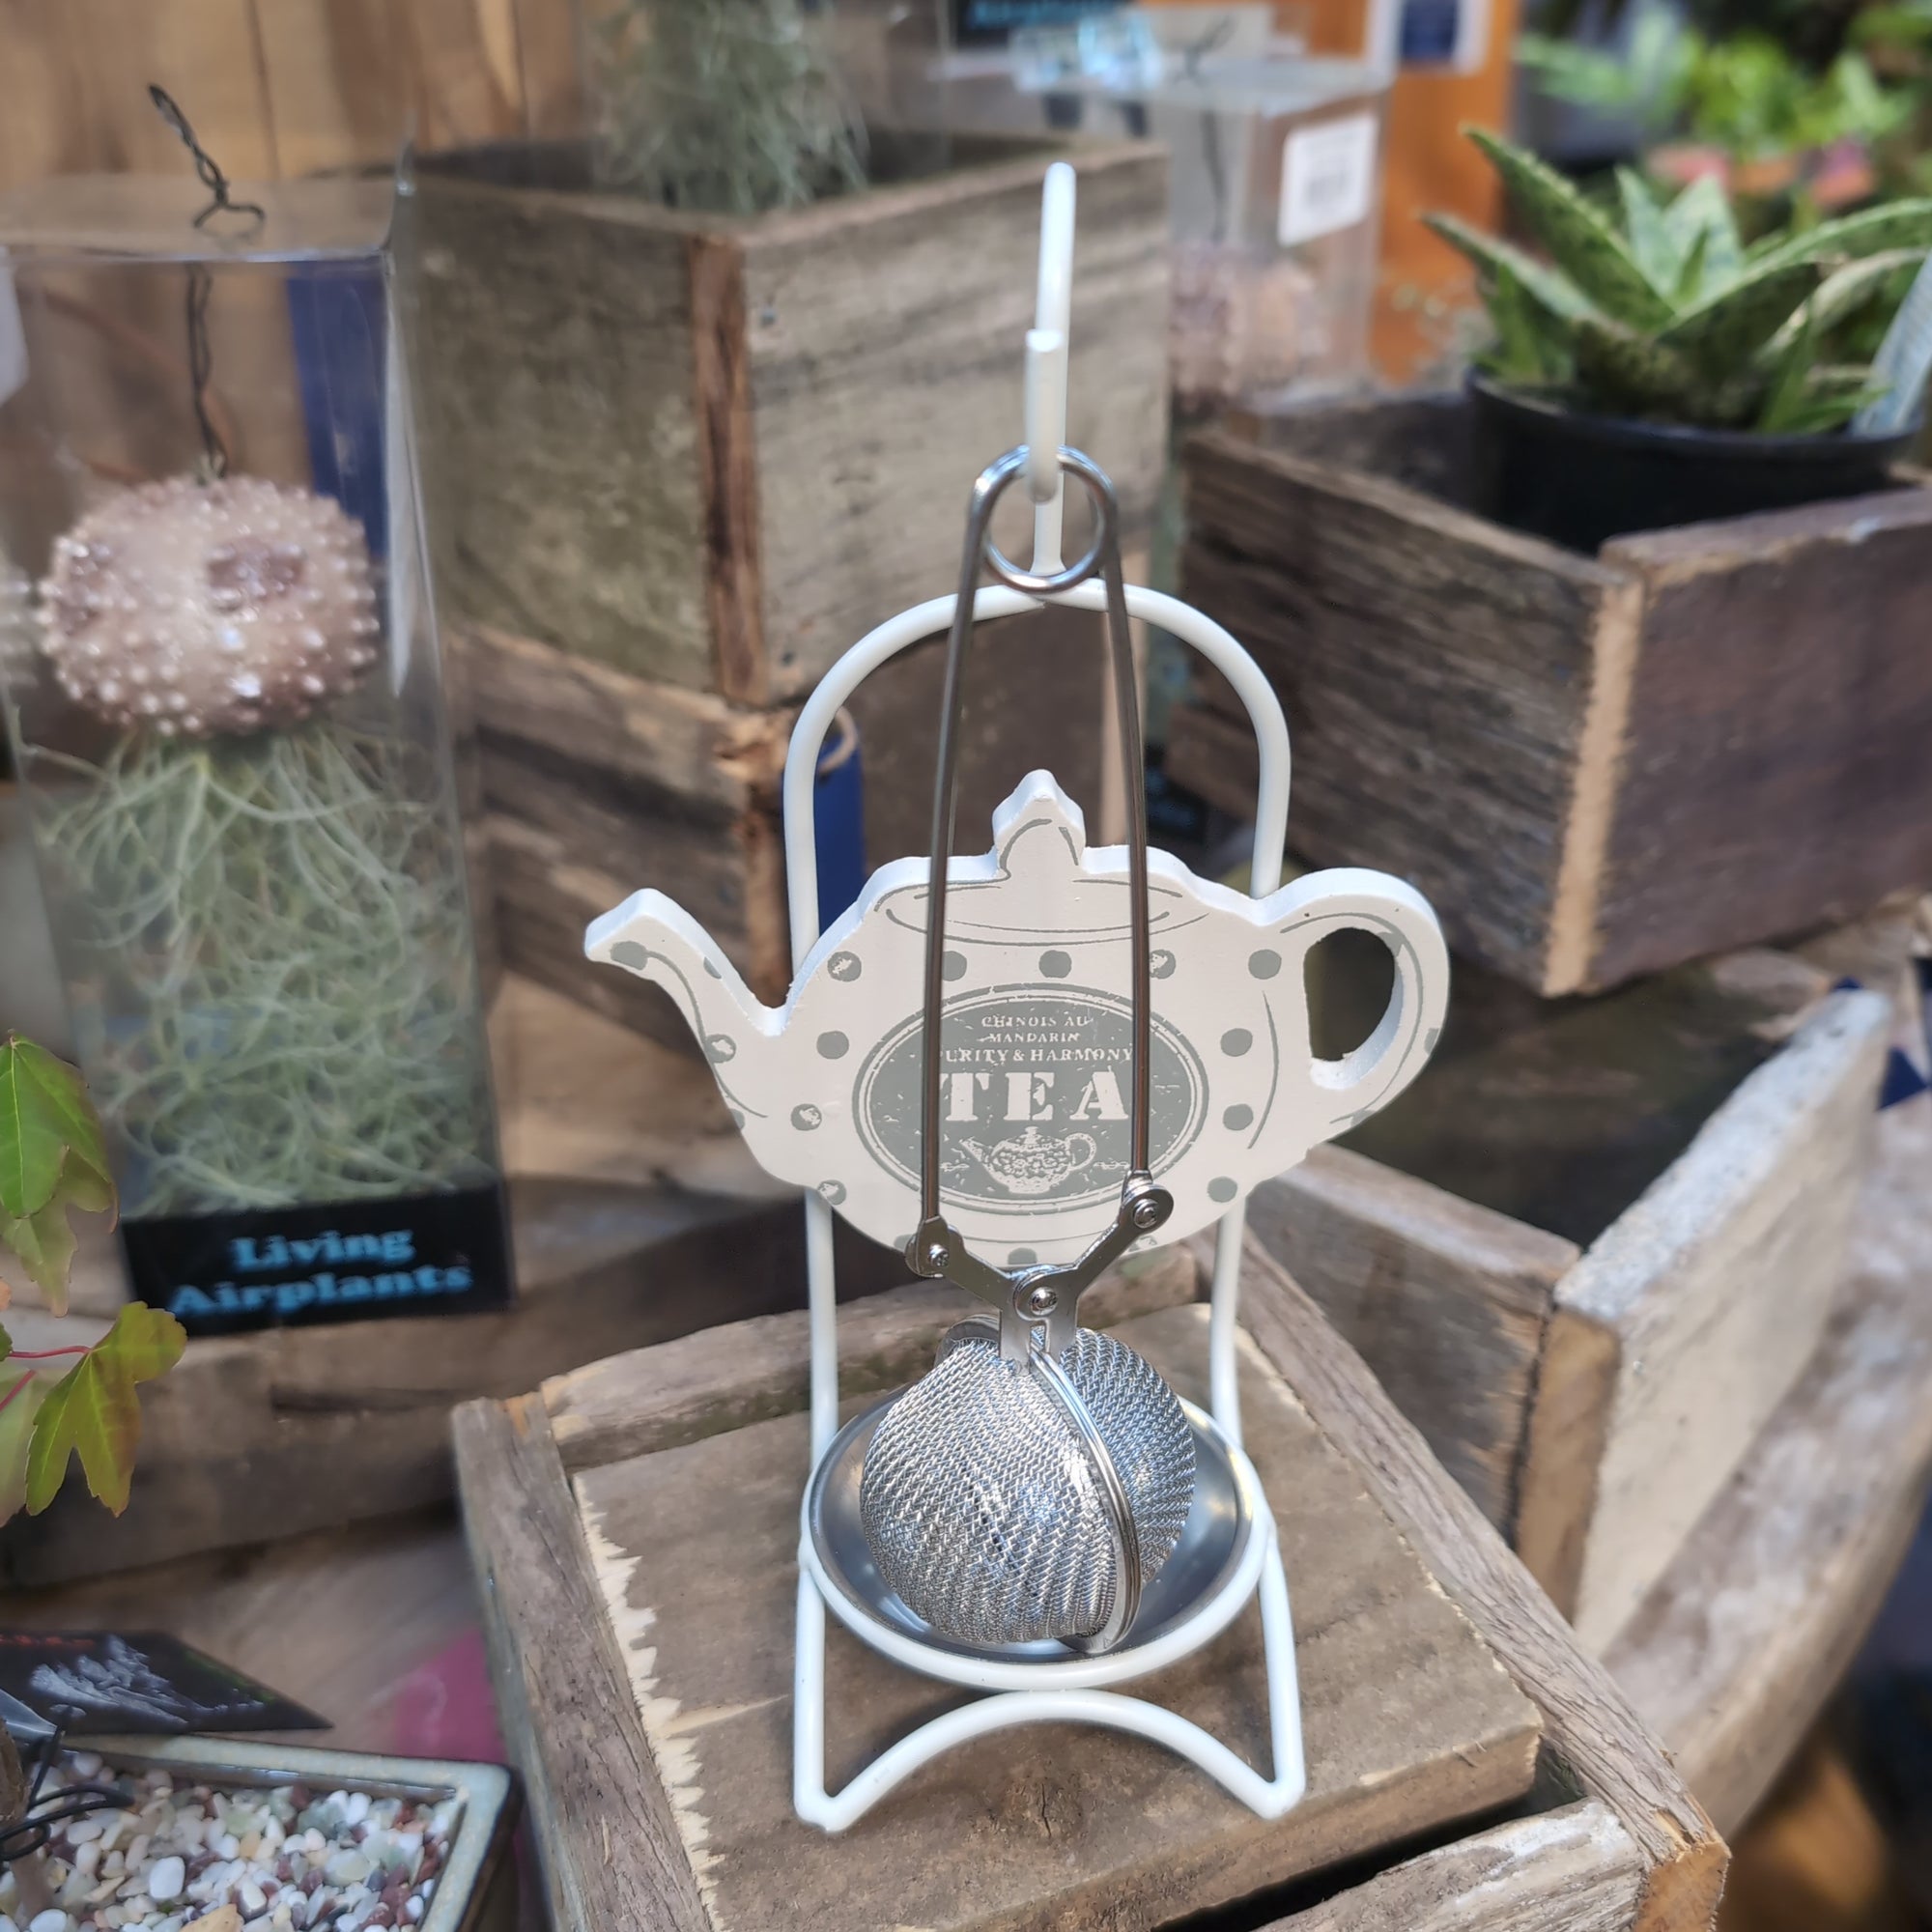 Tea strainer with holder